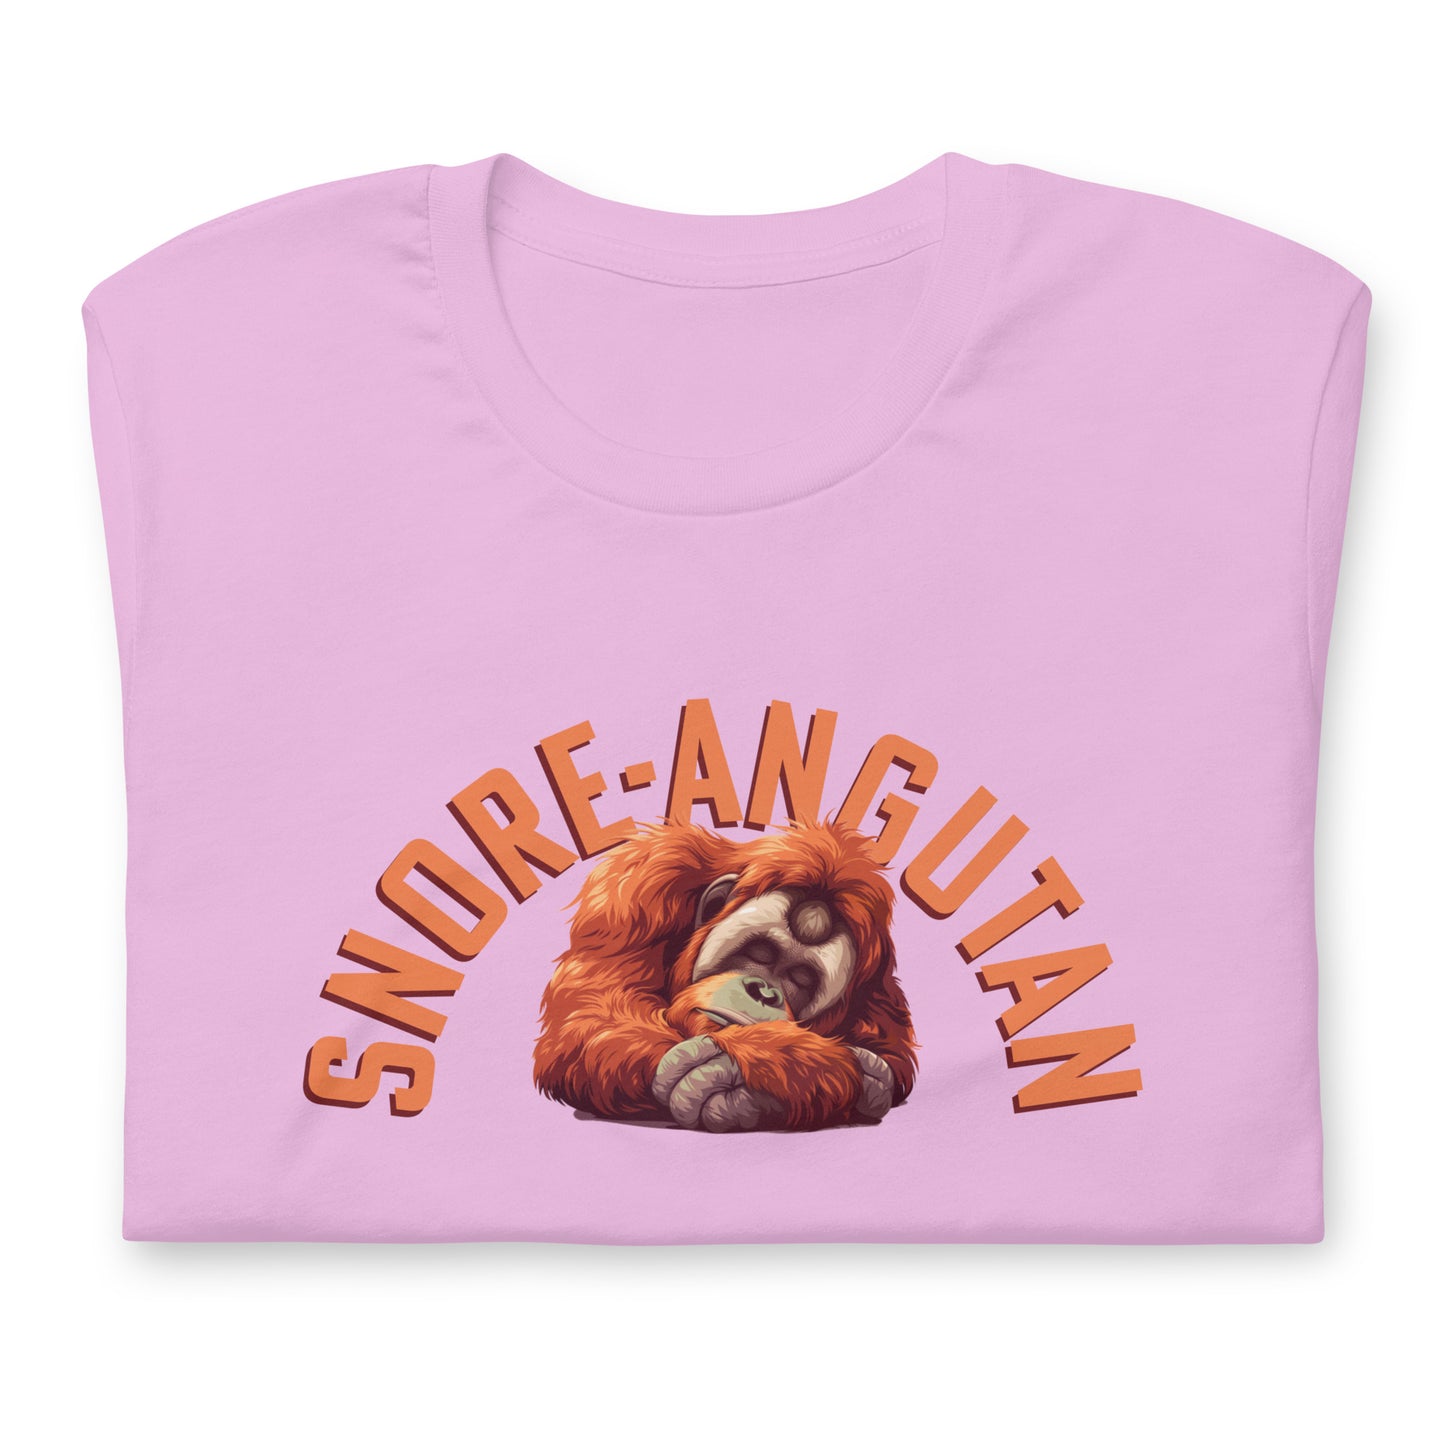 SNORE-ANGUTAN-Orangutan-Sleep-Animals-Cute-Graphic Tee Shirt-Lilac